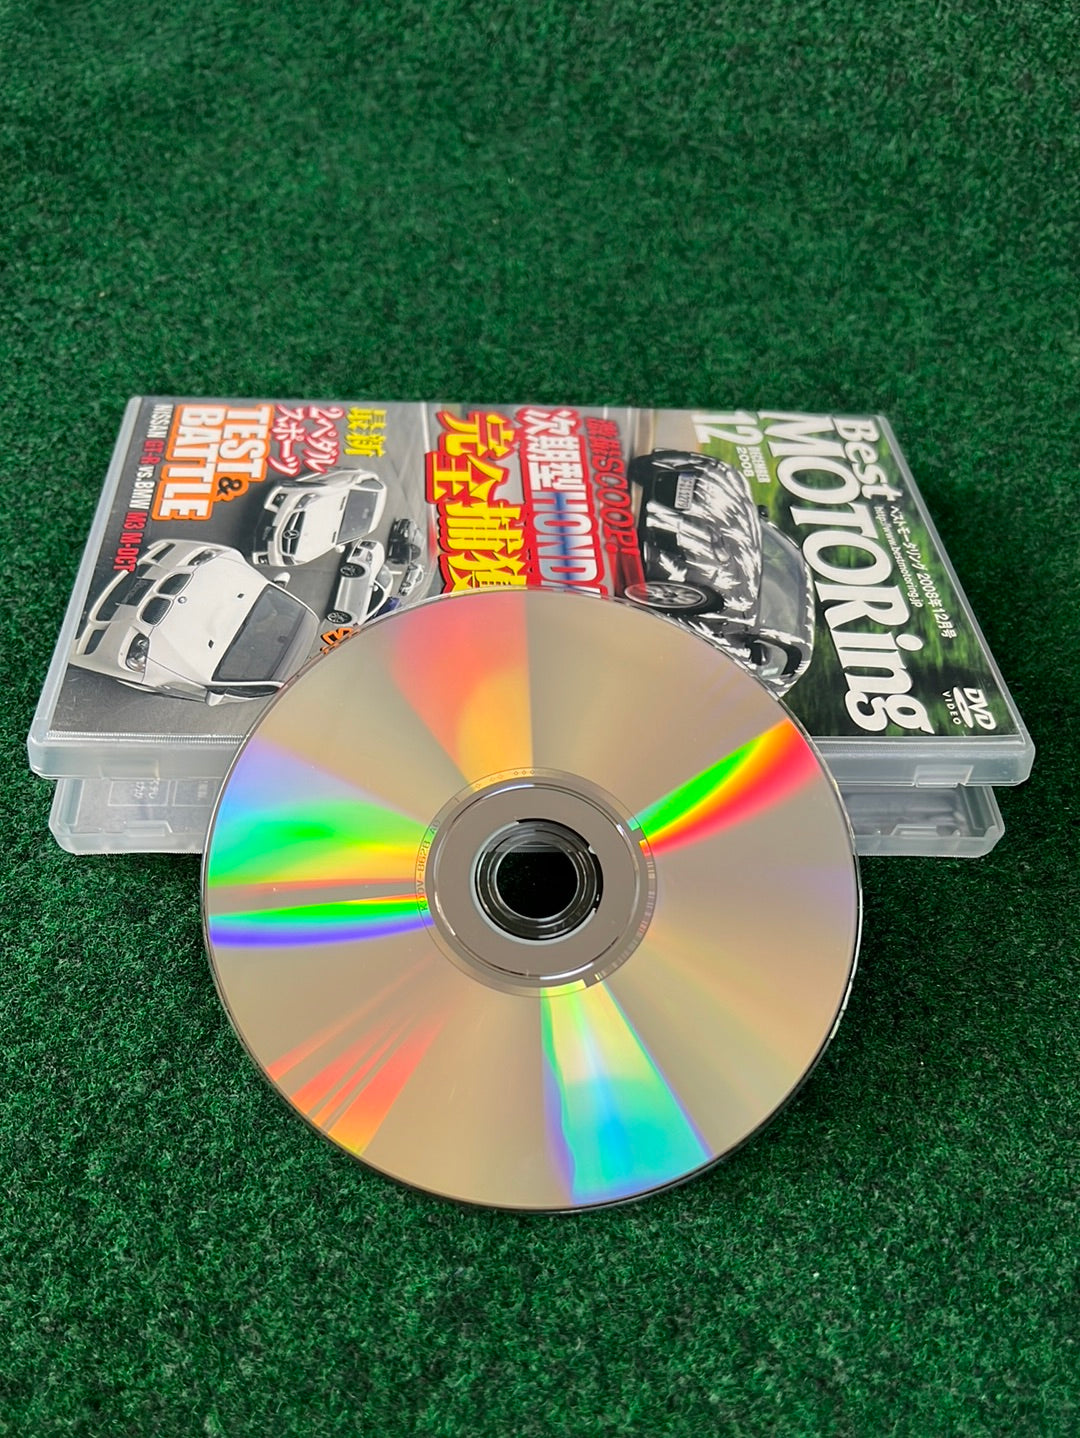 Best Motoring DVD - December 2008